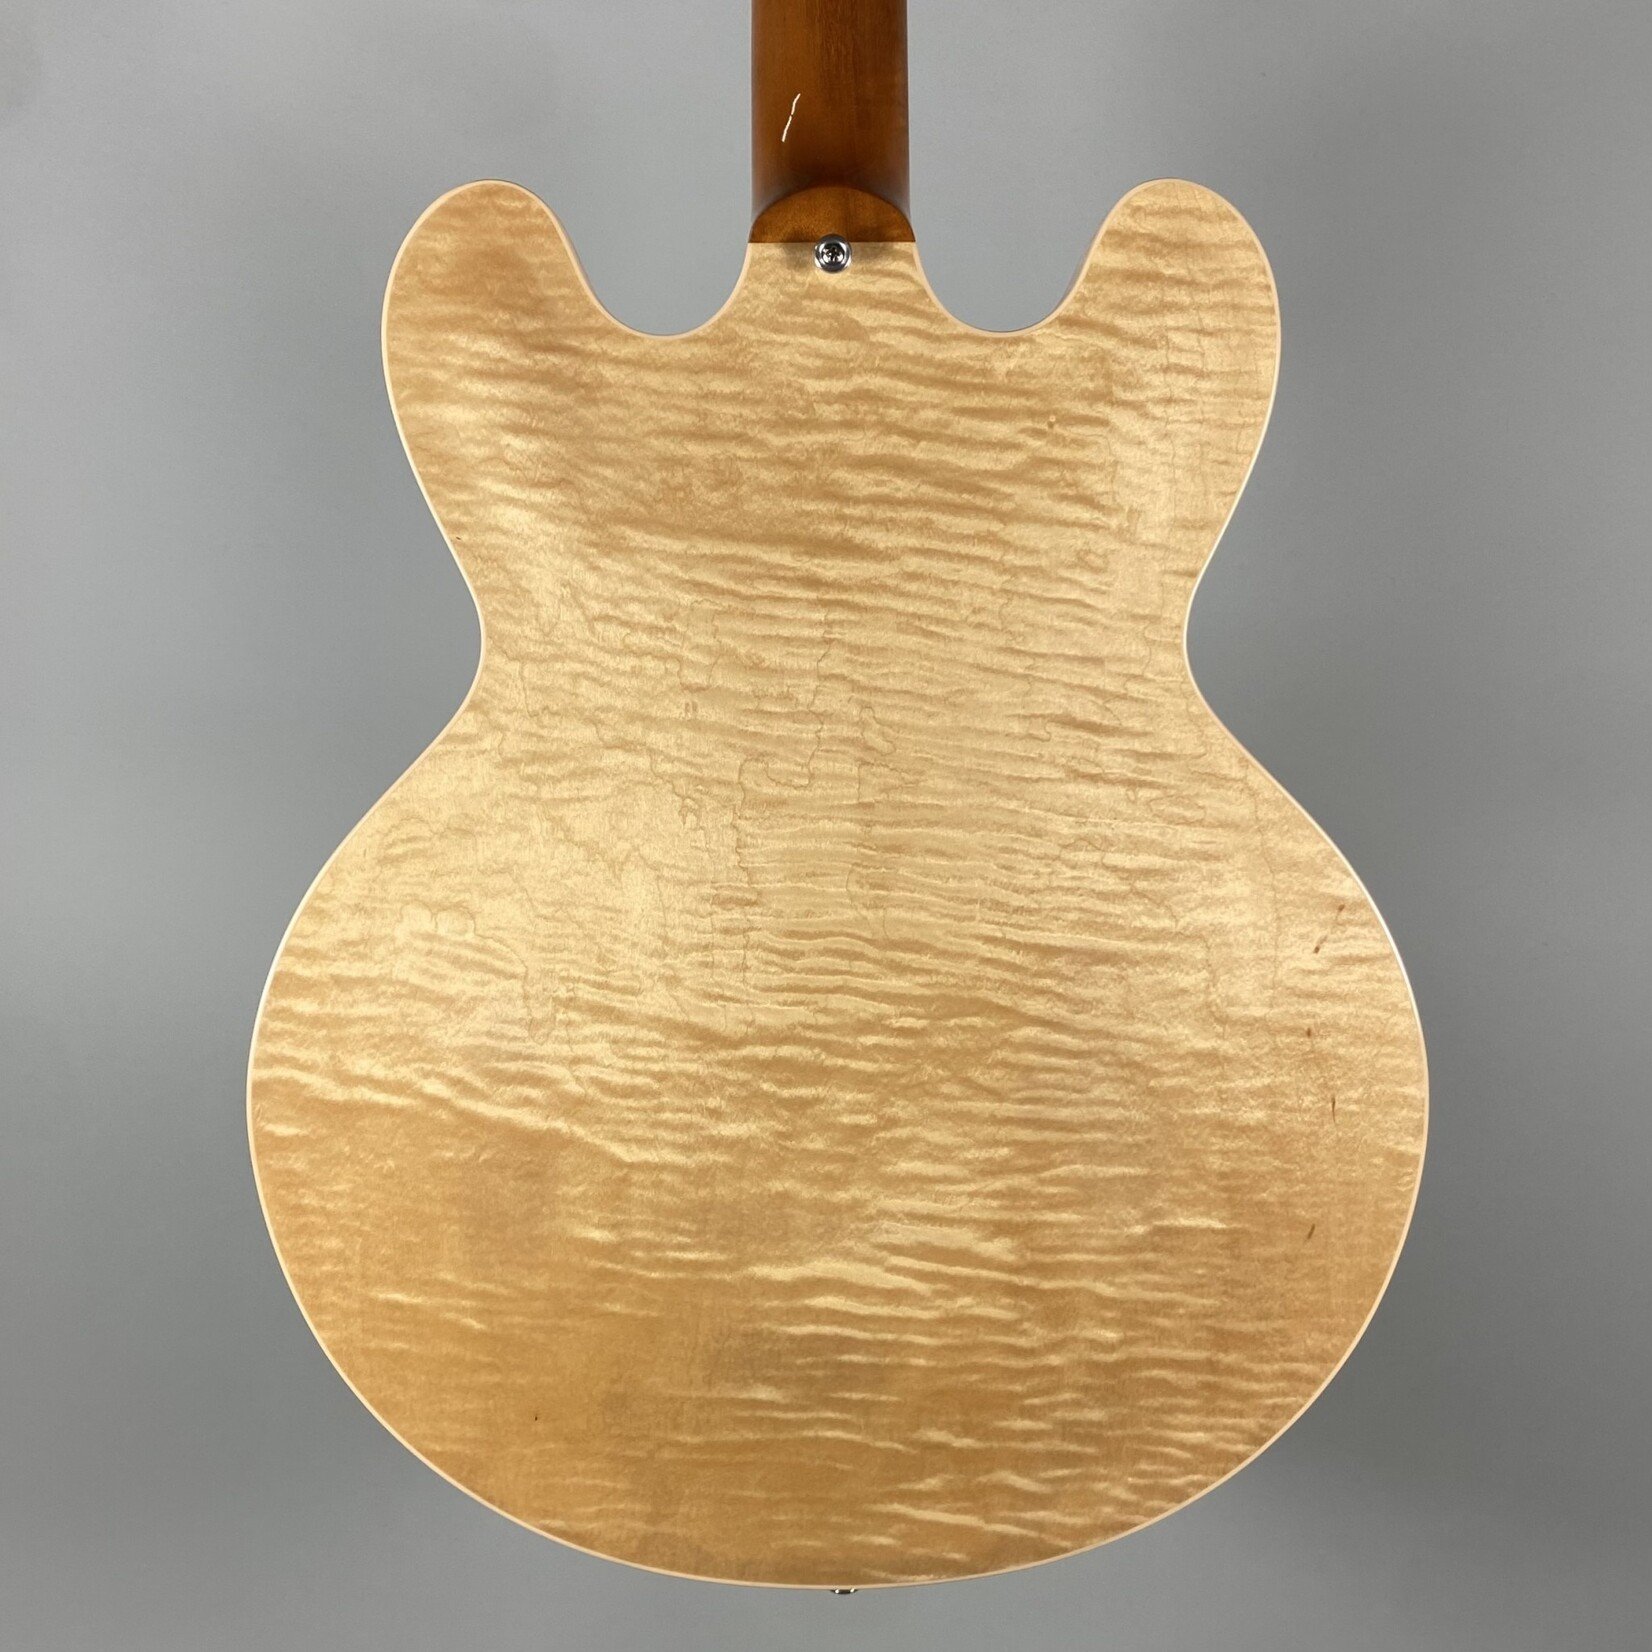 Gibson 2016 Gibson ES-335 Flame Natural